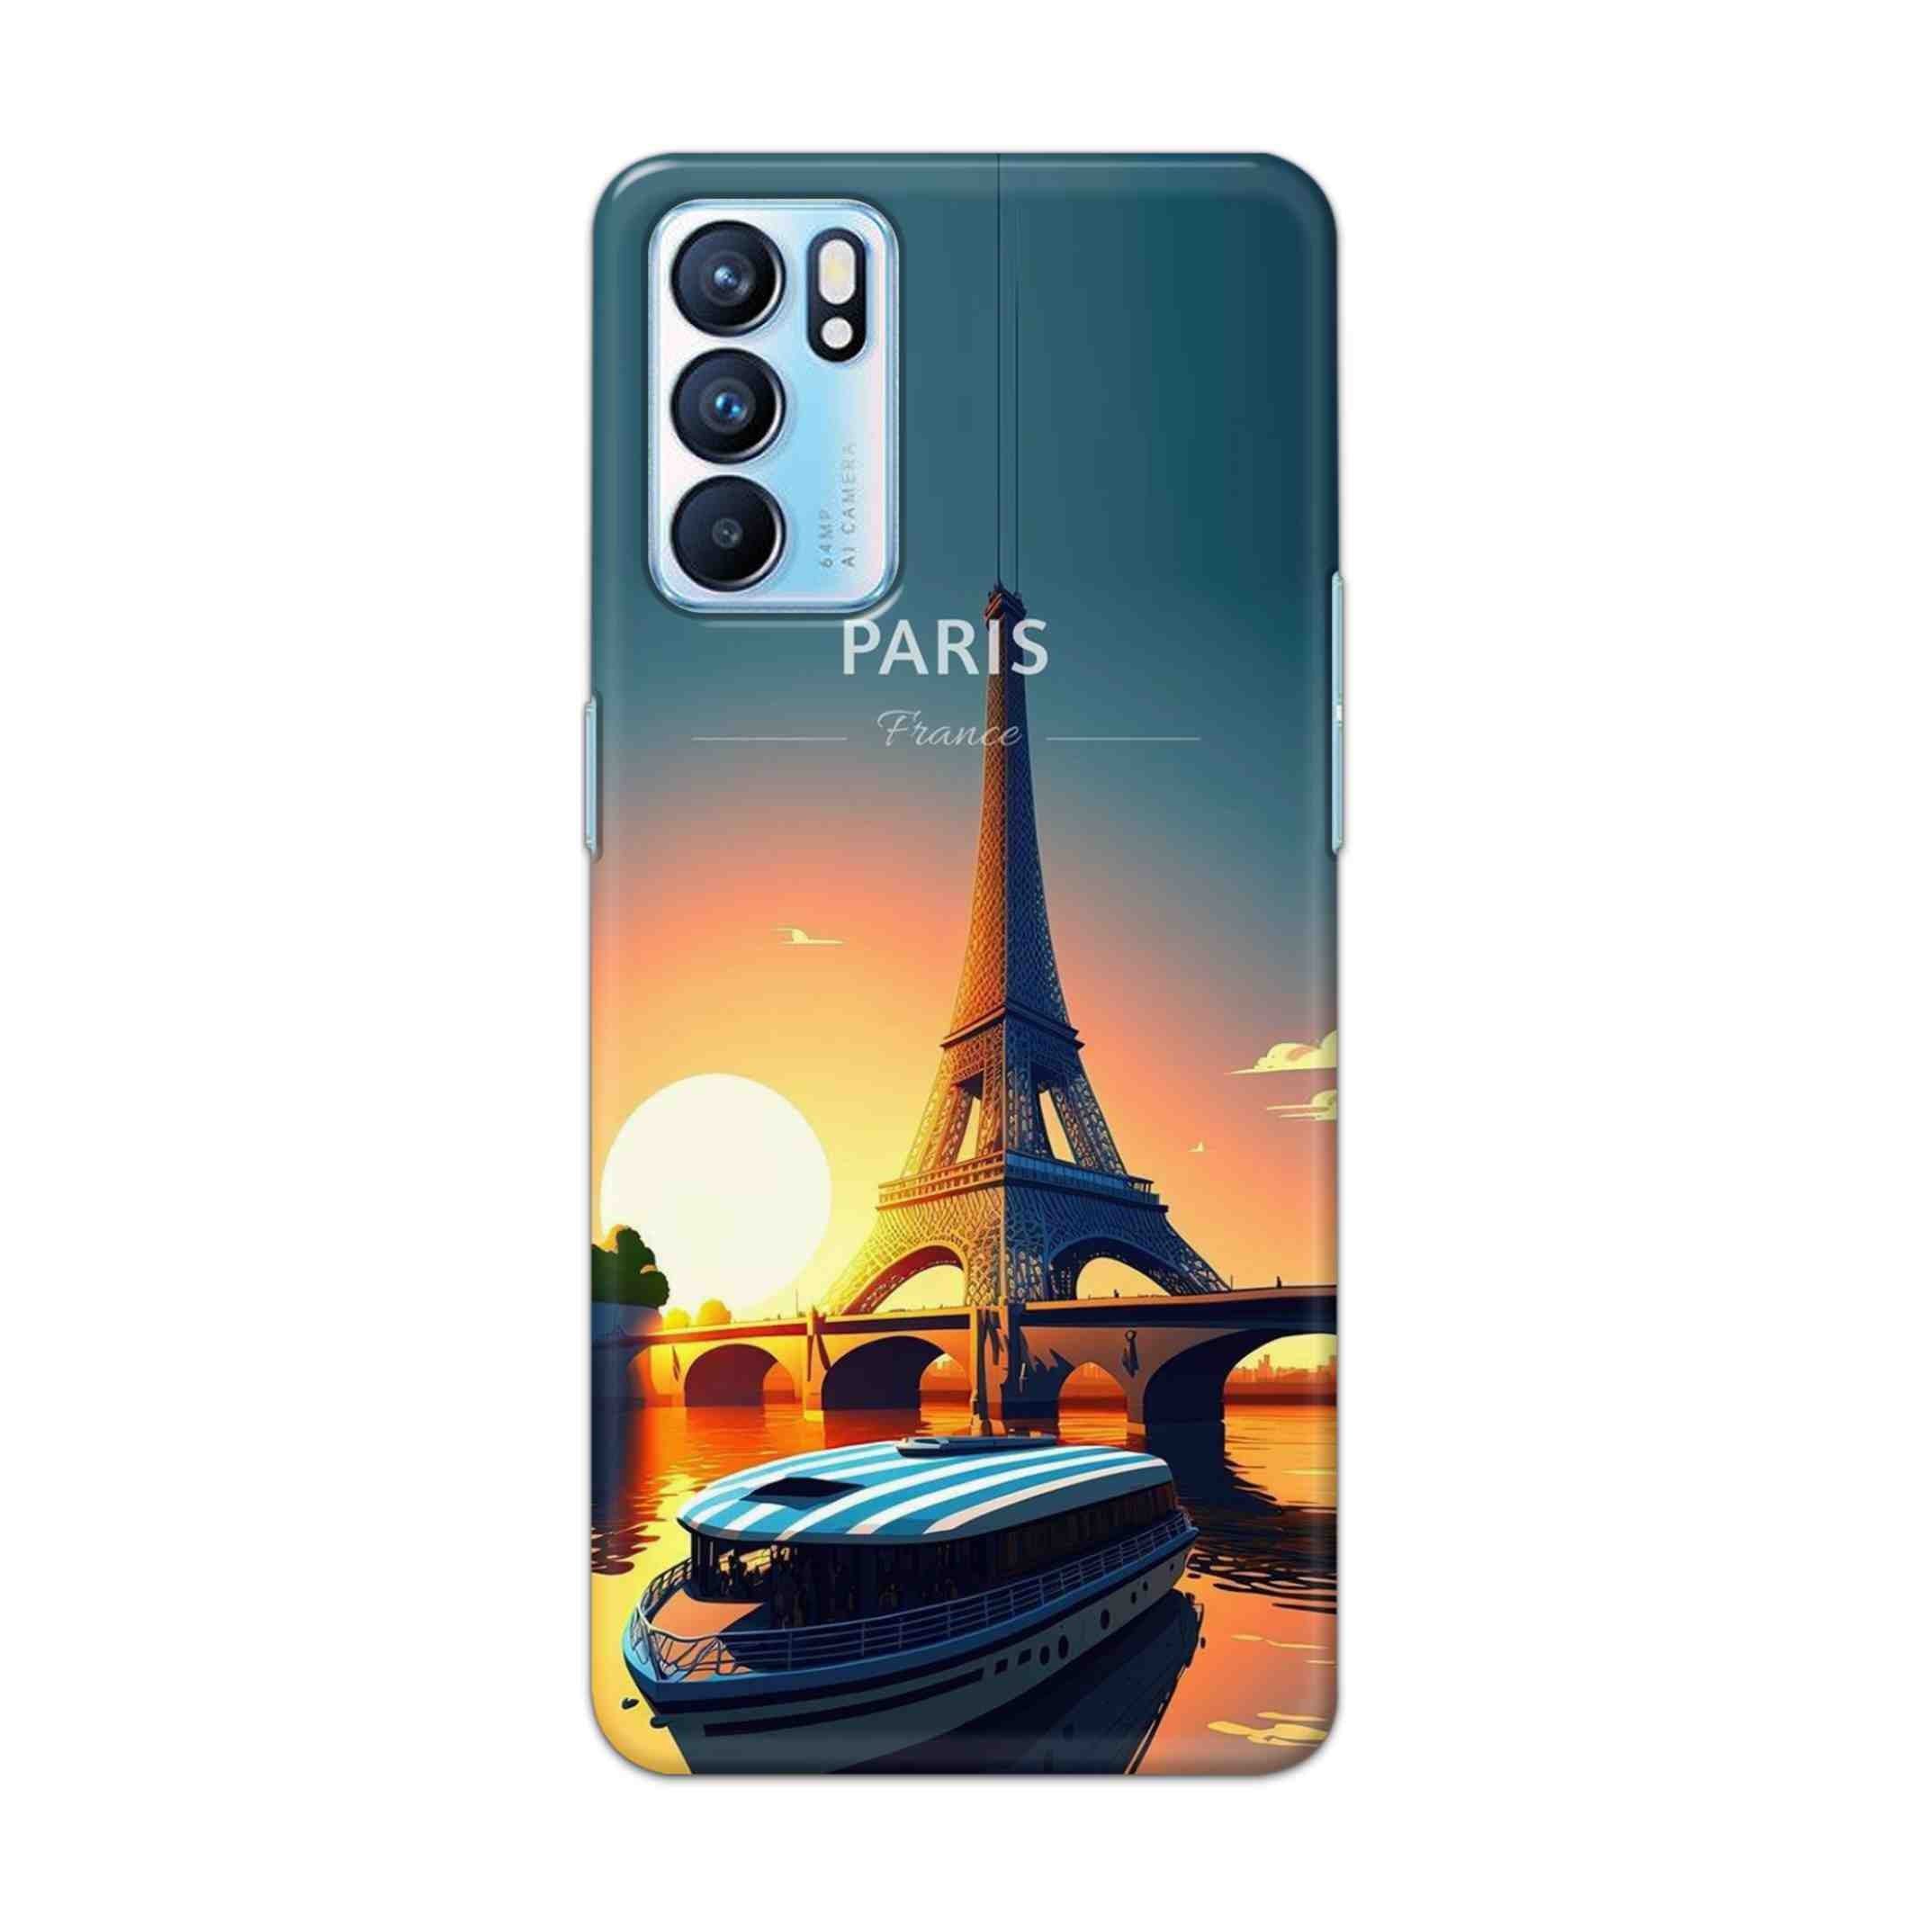 Buy France Hard Back Mobile Phone Case Cover For OPPO RENO 6 Online